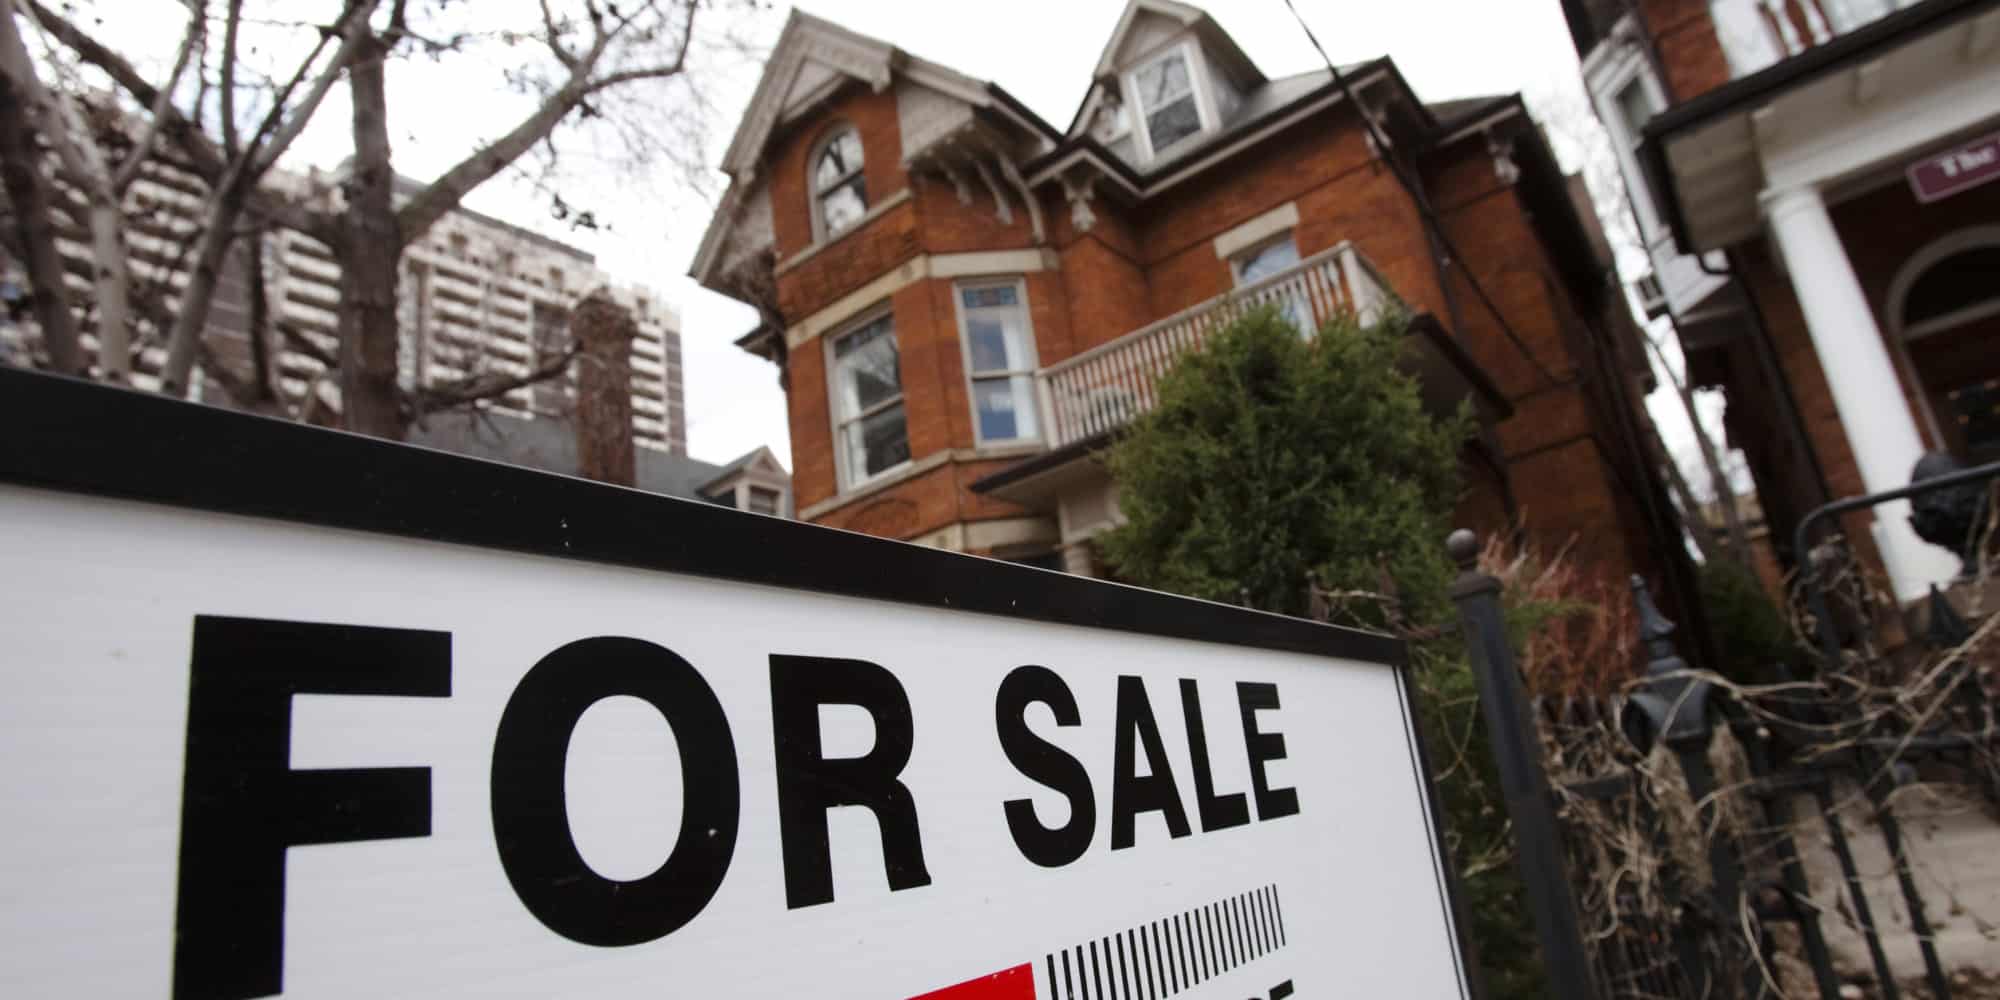 Promedio de precios de casas en Toronto suben un 23%